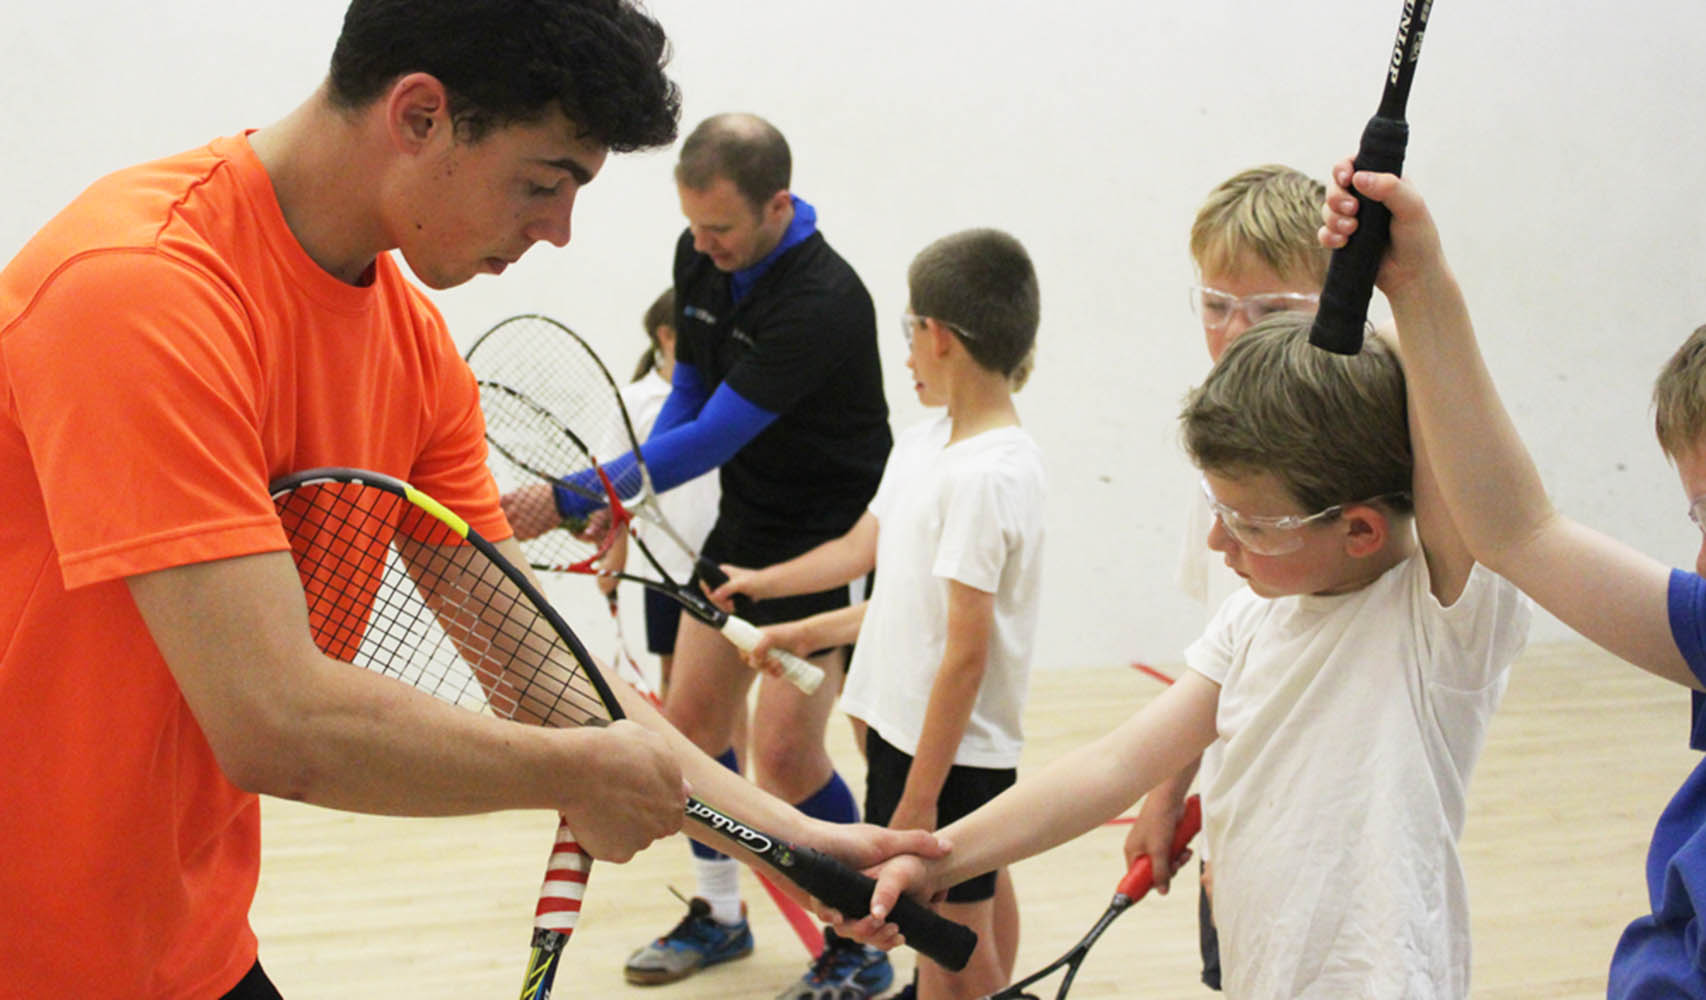 Coach leading a squash session to school children